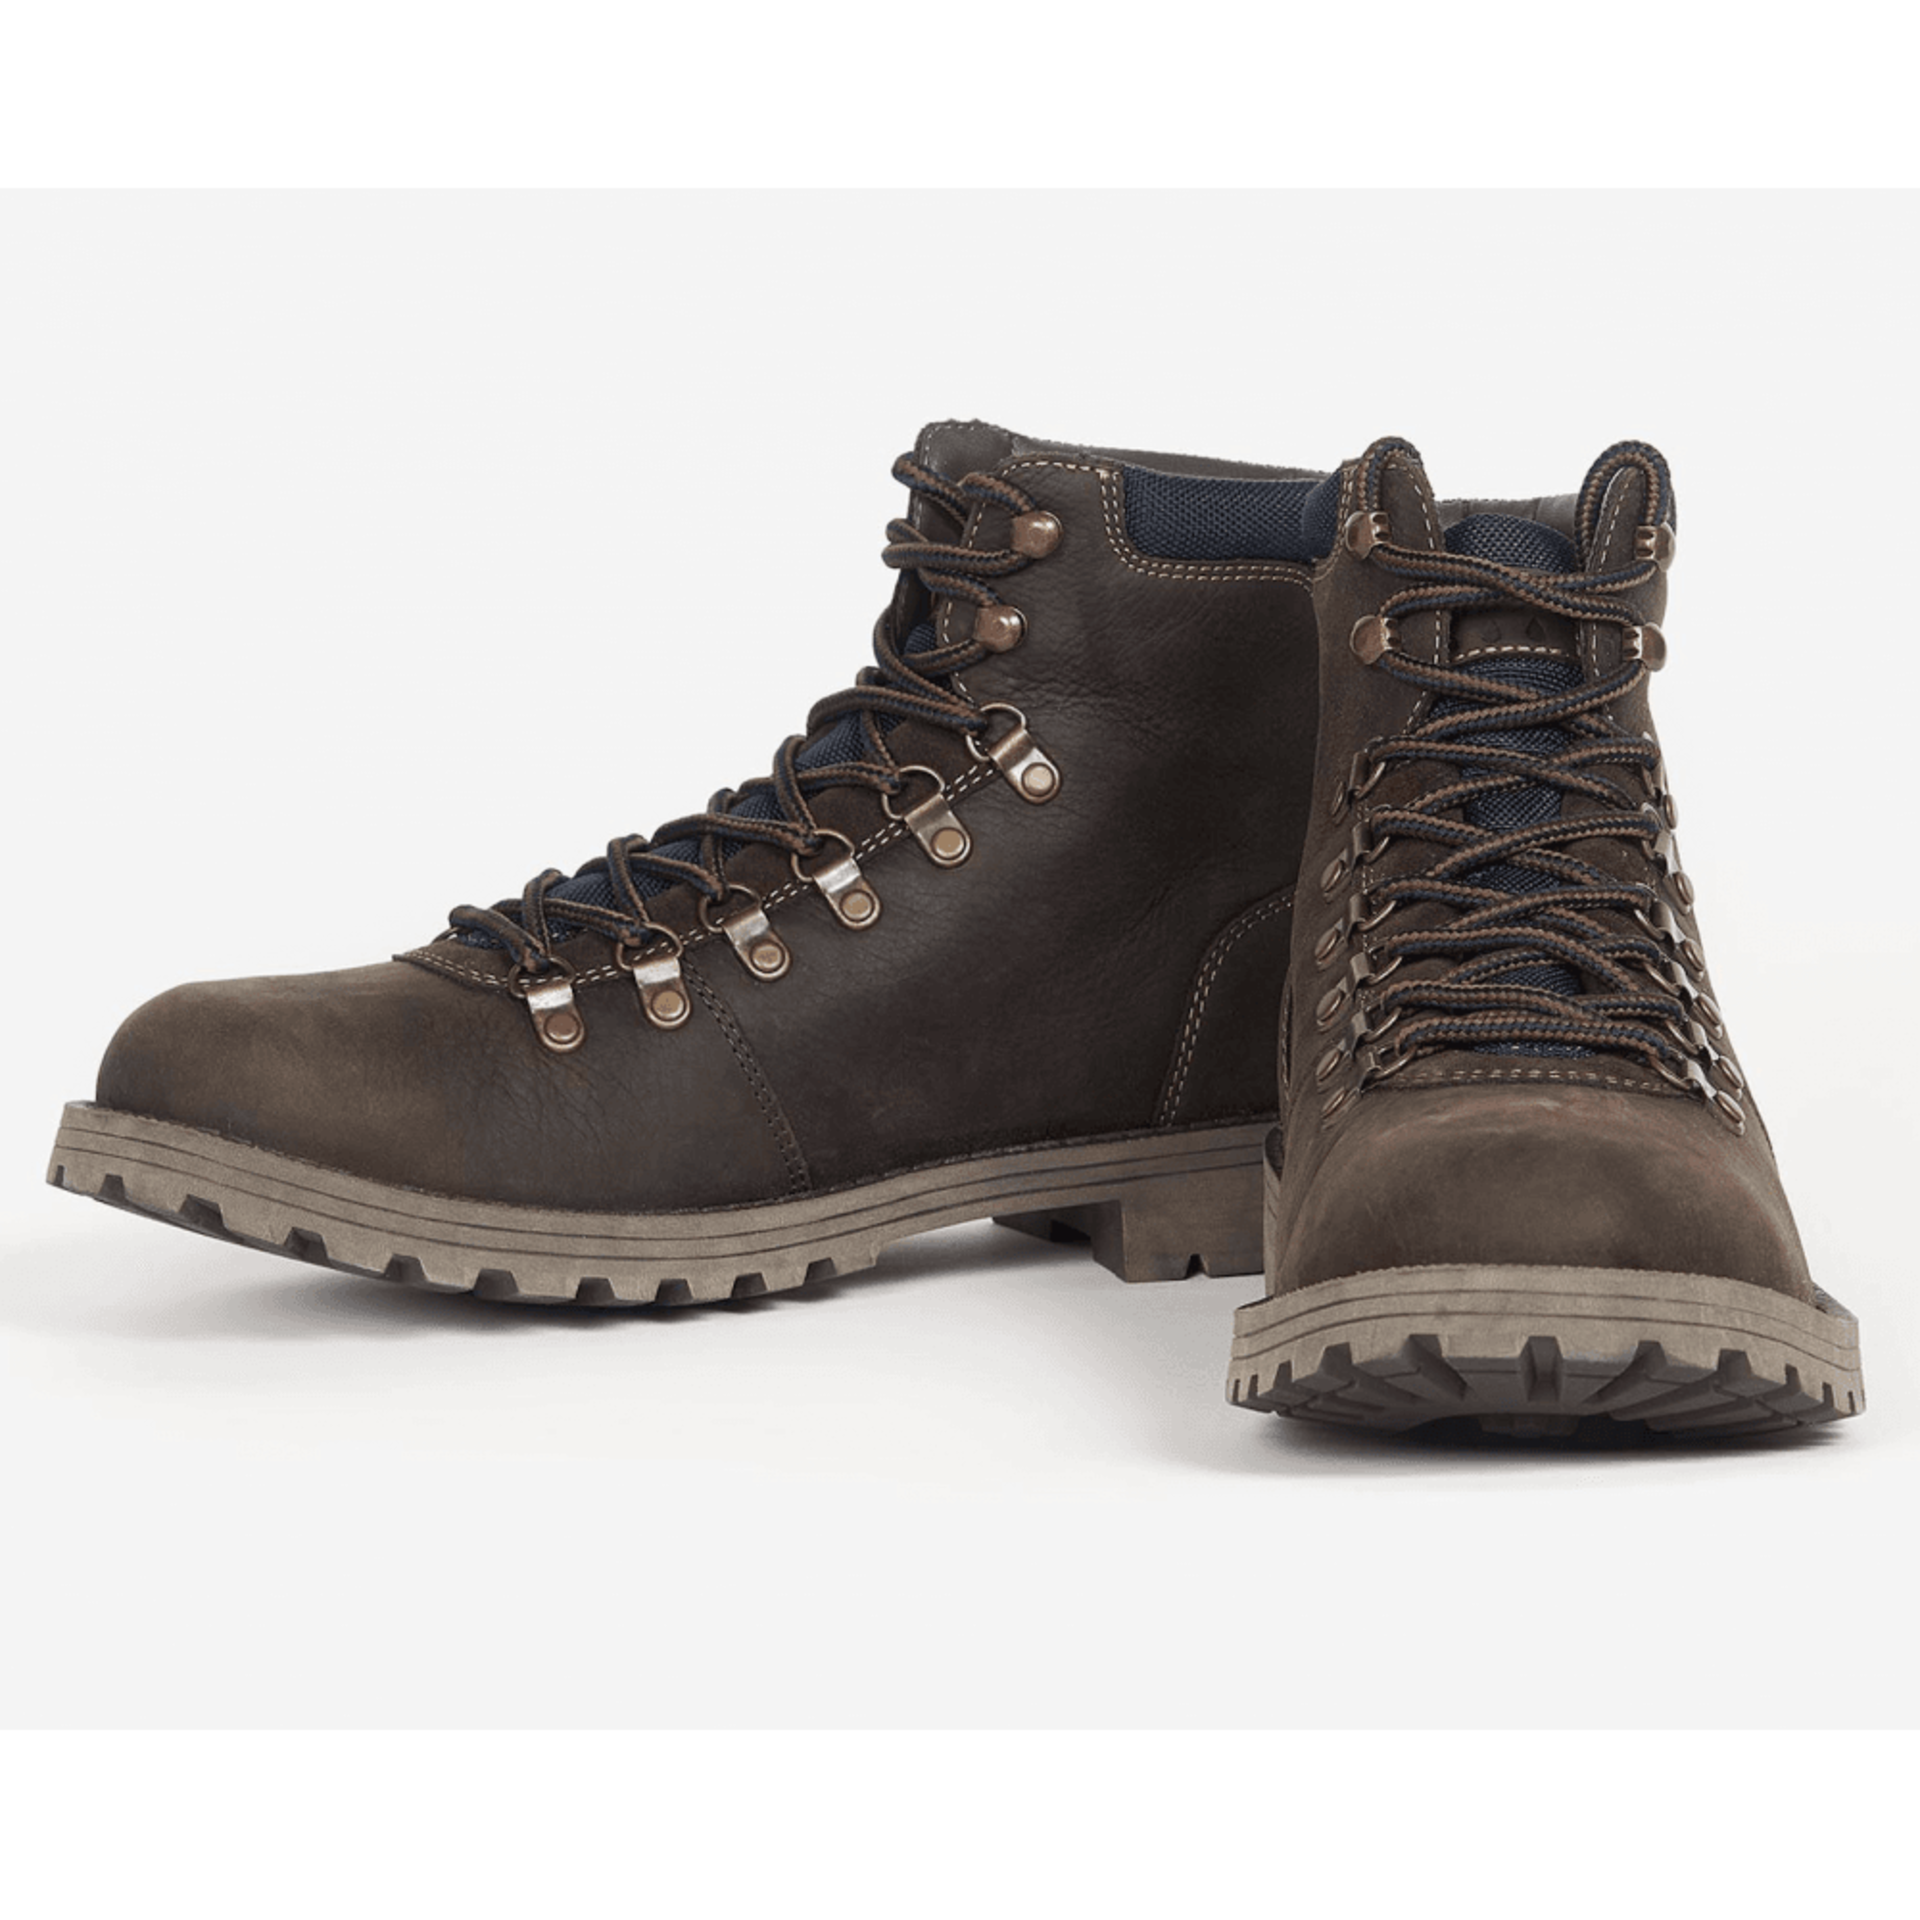 New Size 10 Barbour Oak Quantock Hiker Boots - RRP £159. - Image 2 of 3